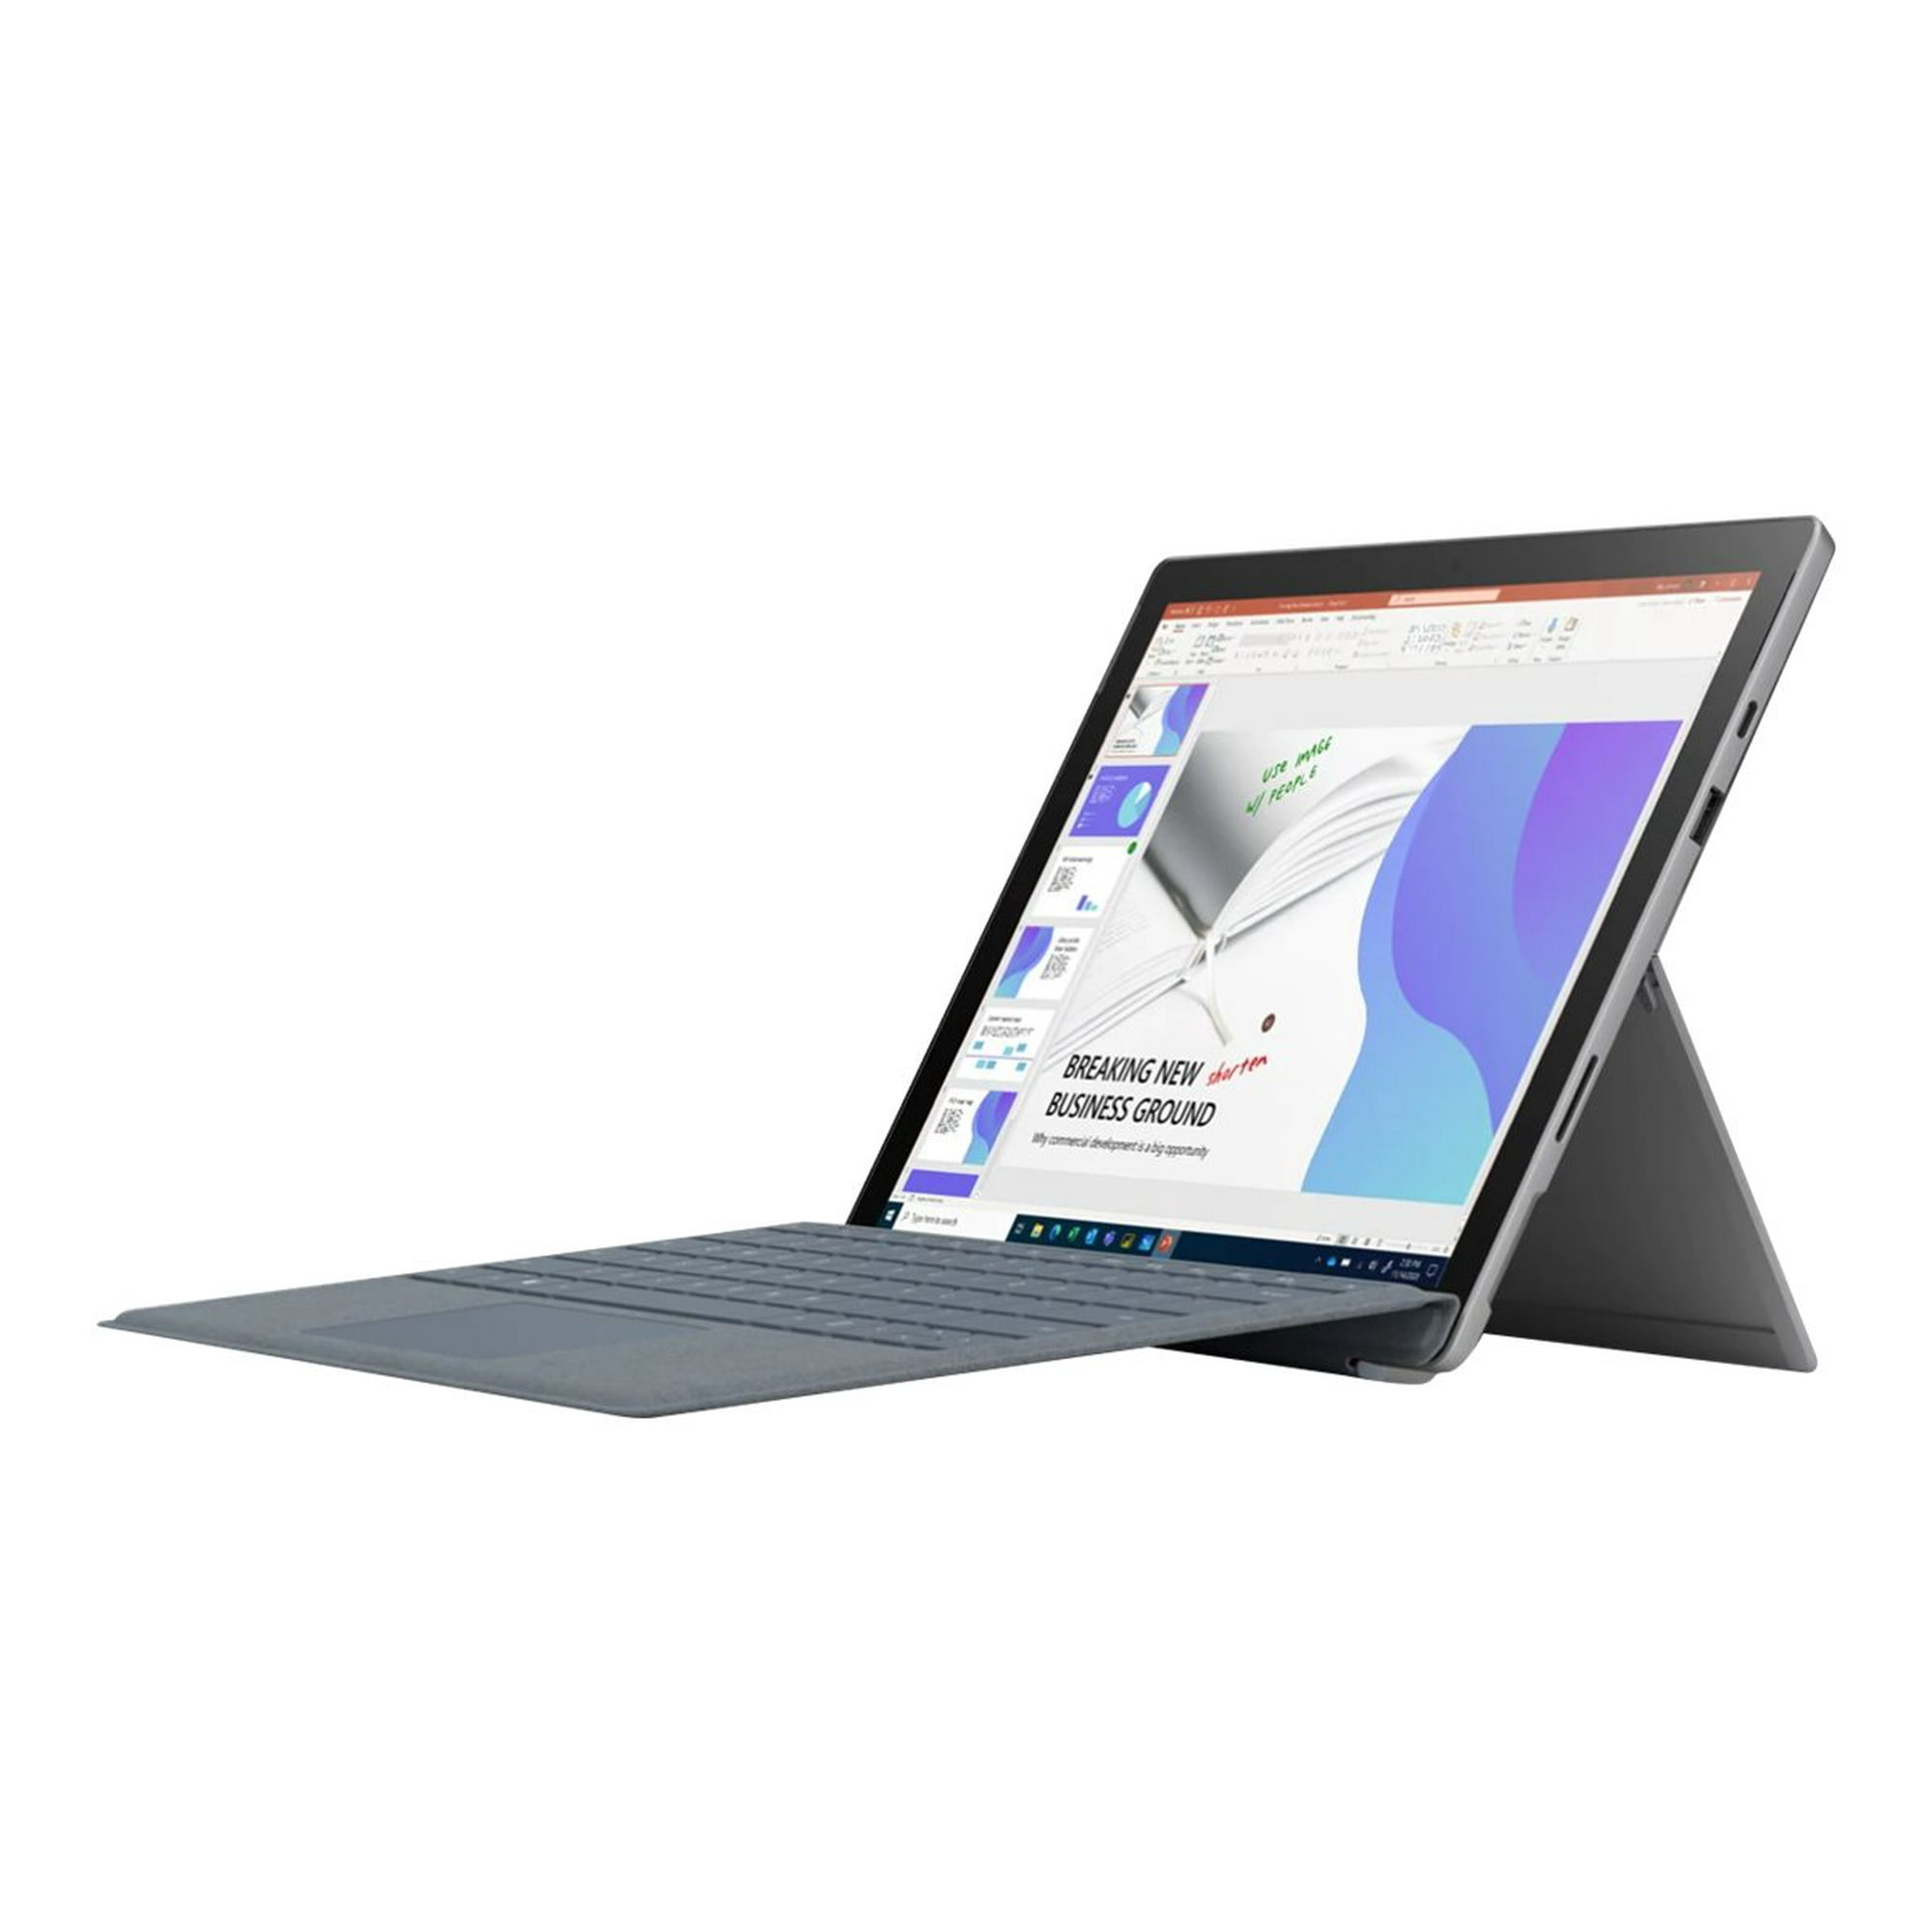 Microsoft Surface Pro 7+ - Tablet - Intel Core i5 1135G7 - Win 10 Pro -  Iris Xe Graphics - 16 GB RAM - 256 GB SSD - 12.3